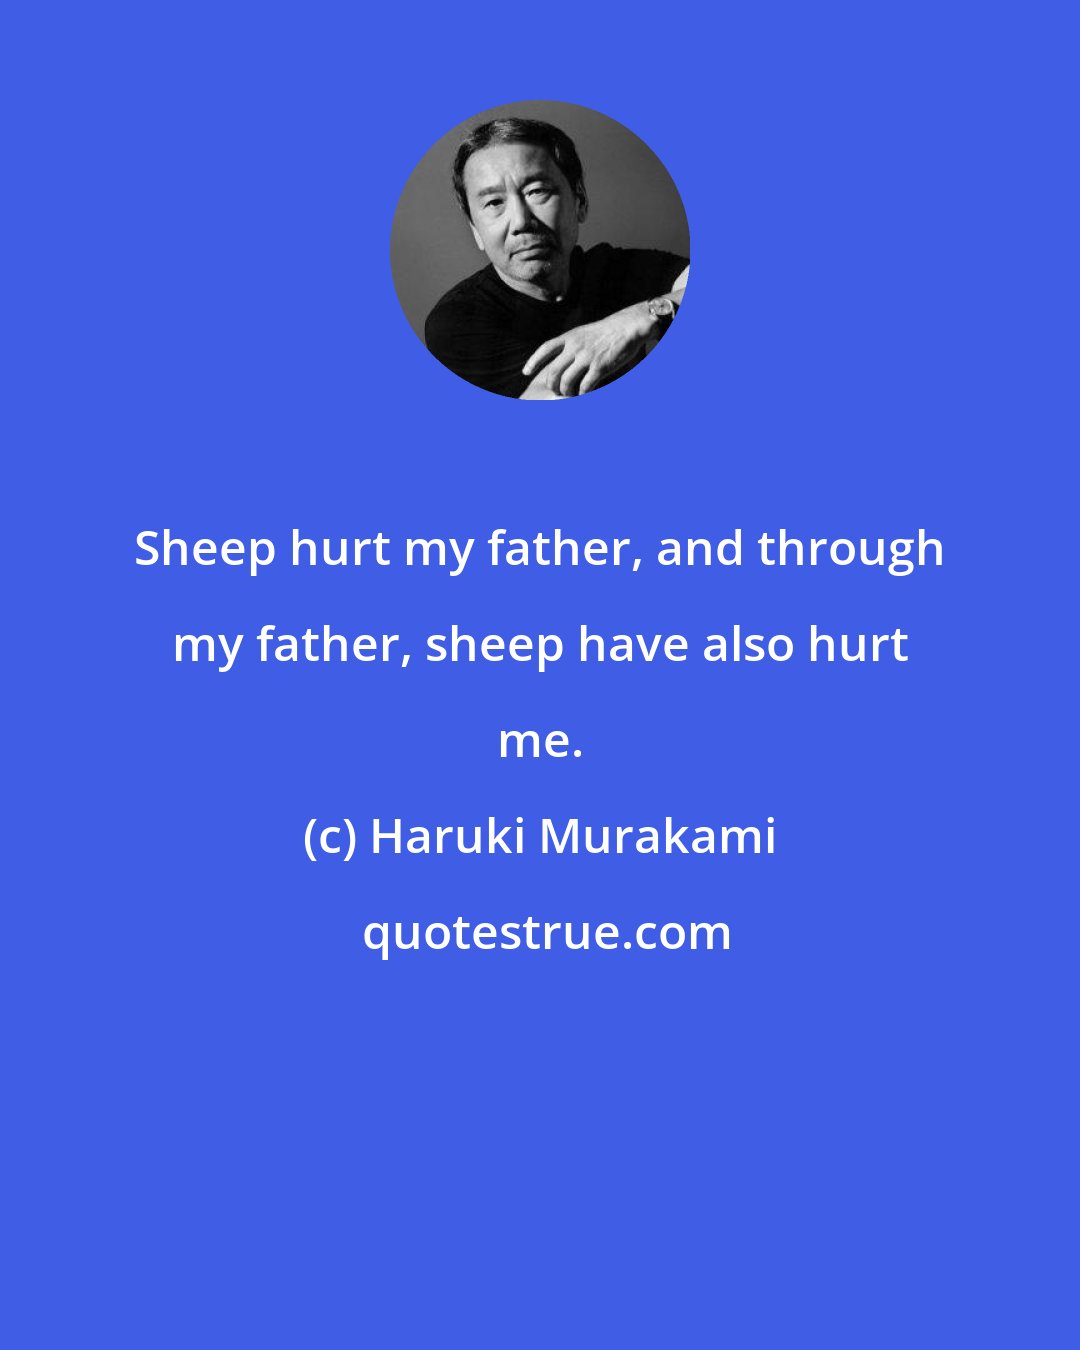 Haruki Murakami: Sheep hurt my father, and through my father, sheep have also hurt me.